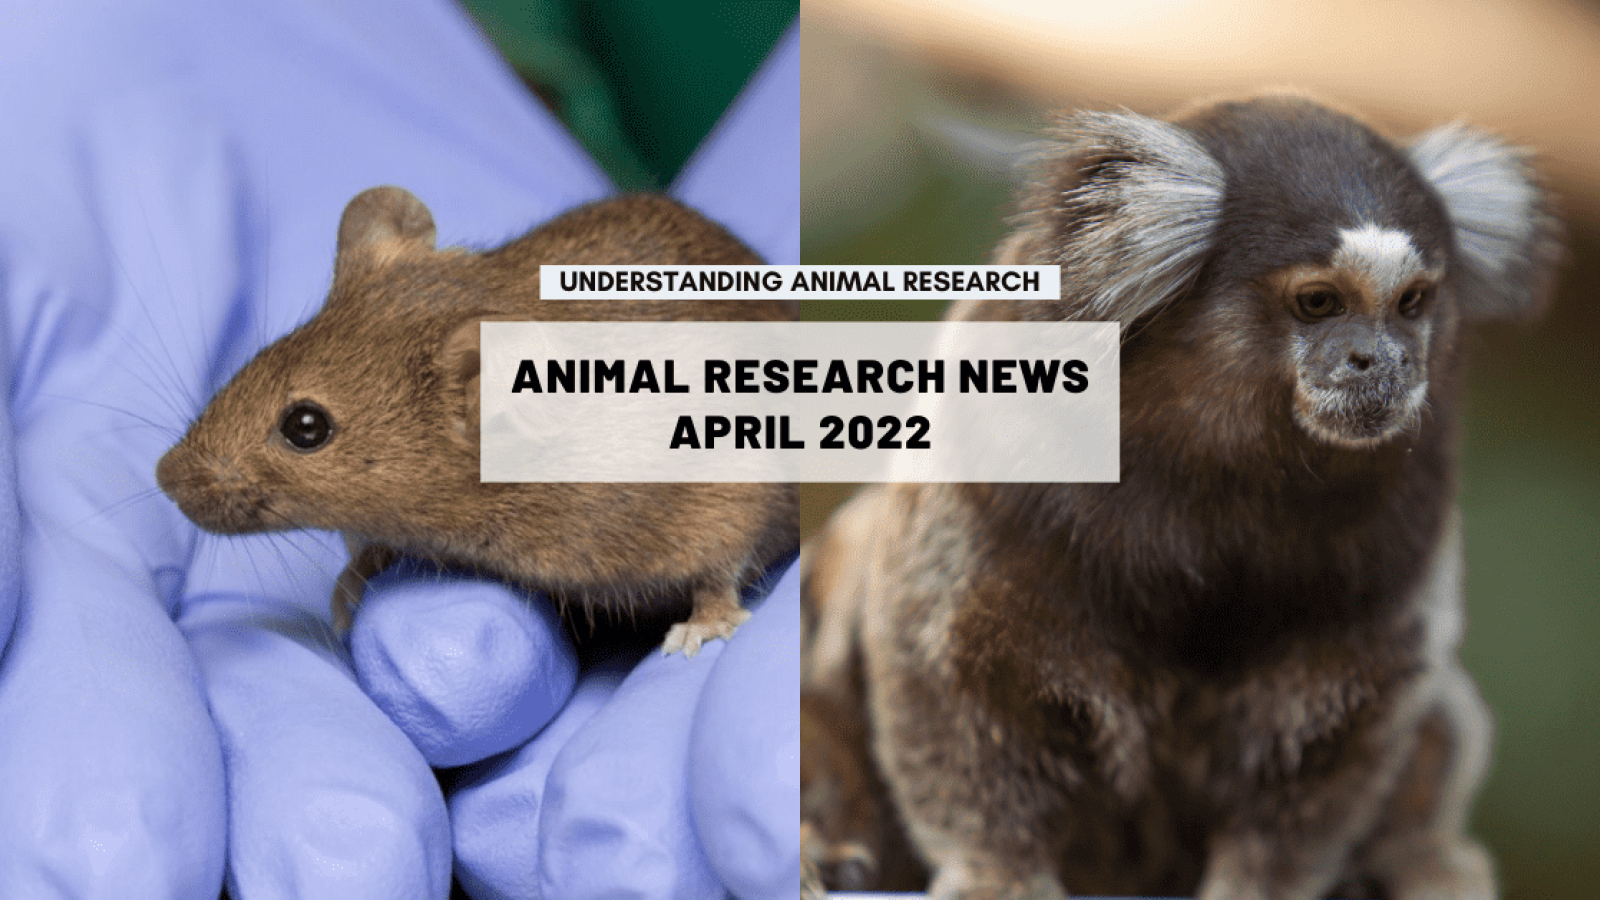 Animal research news: April 2022